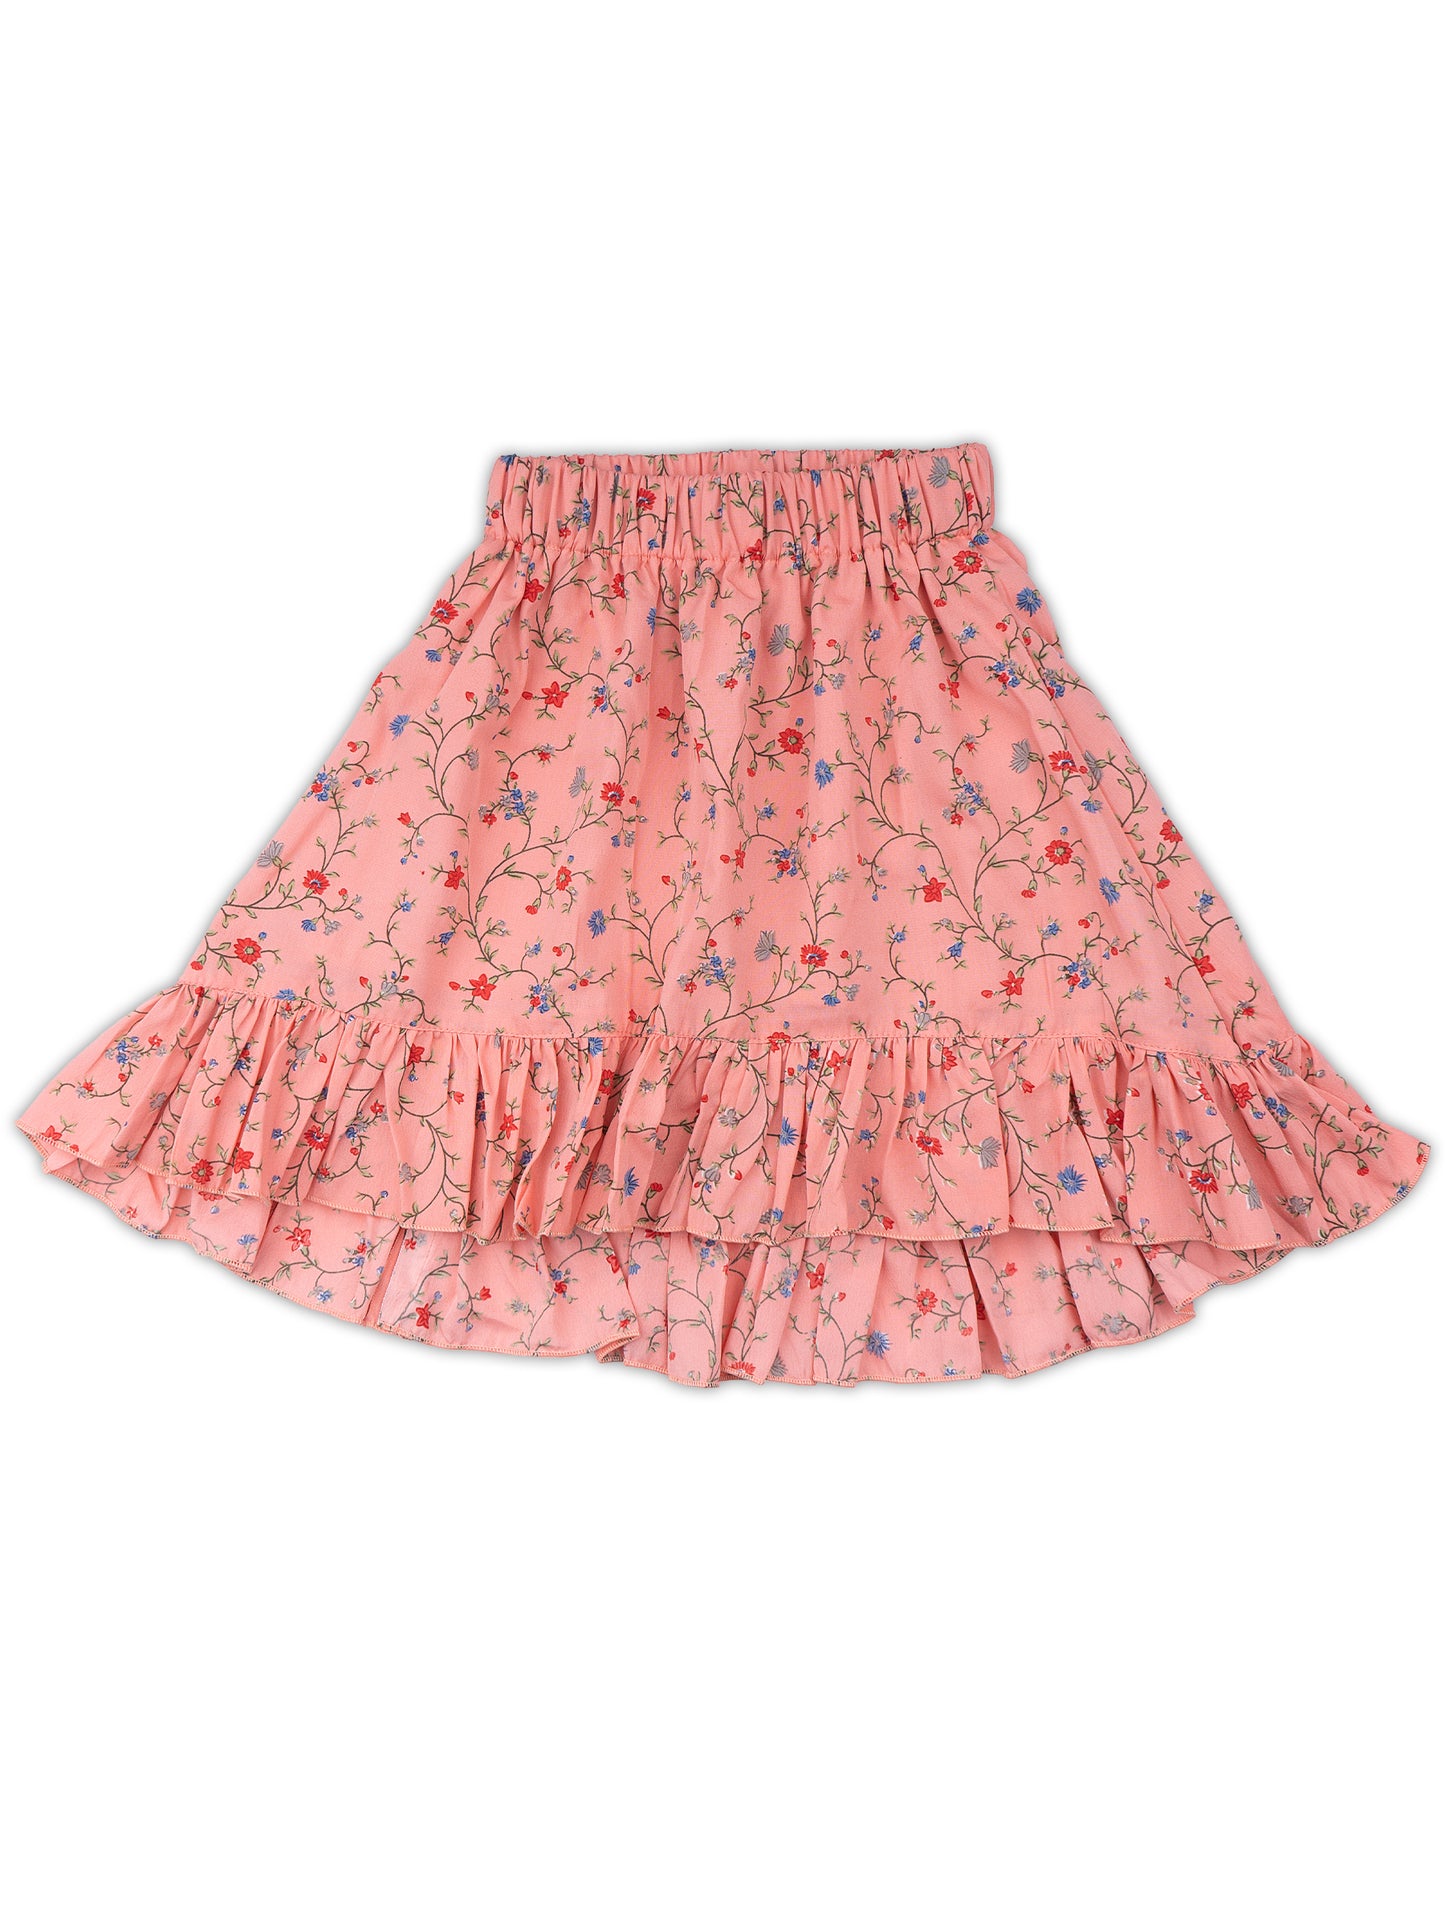 Girls Peach Denim Sleeveless Top & Skirt Set